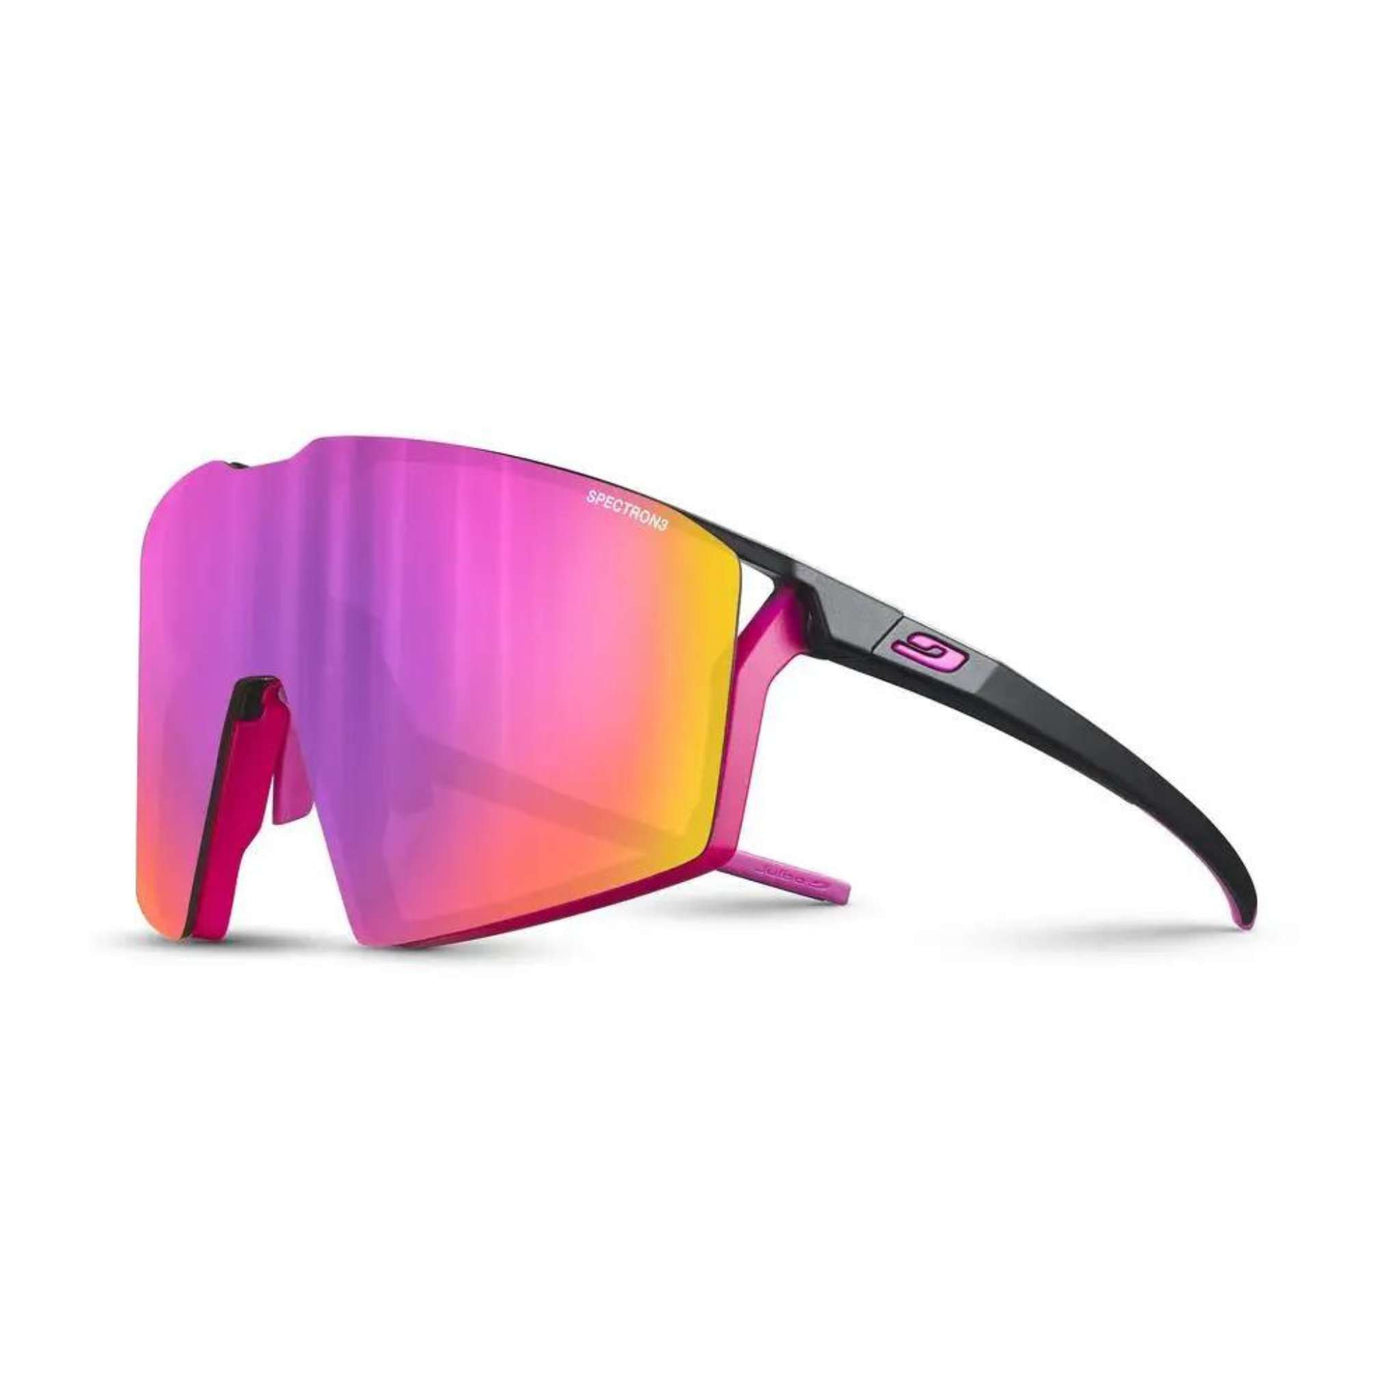  Julbo Edge Matt Black/Pink Sunglasses - Spectron 3 CF Lens | Performance Sunglasses | Further Faster Christchurch NZ